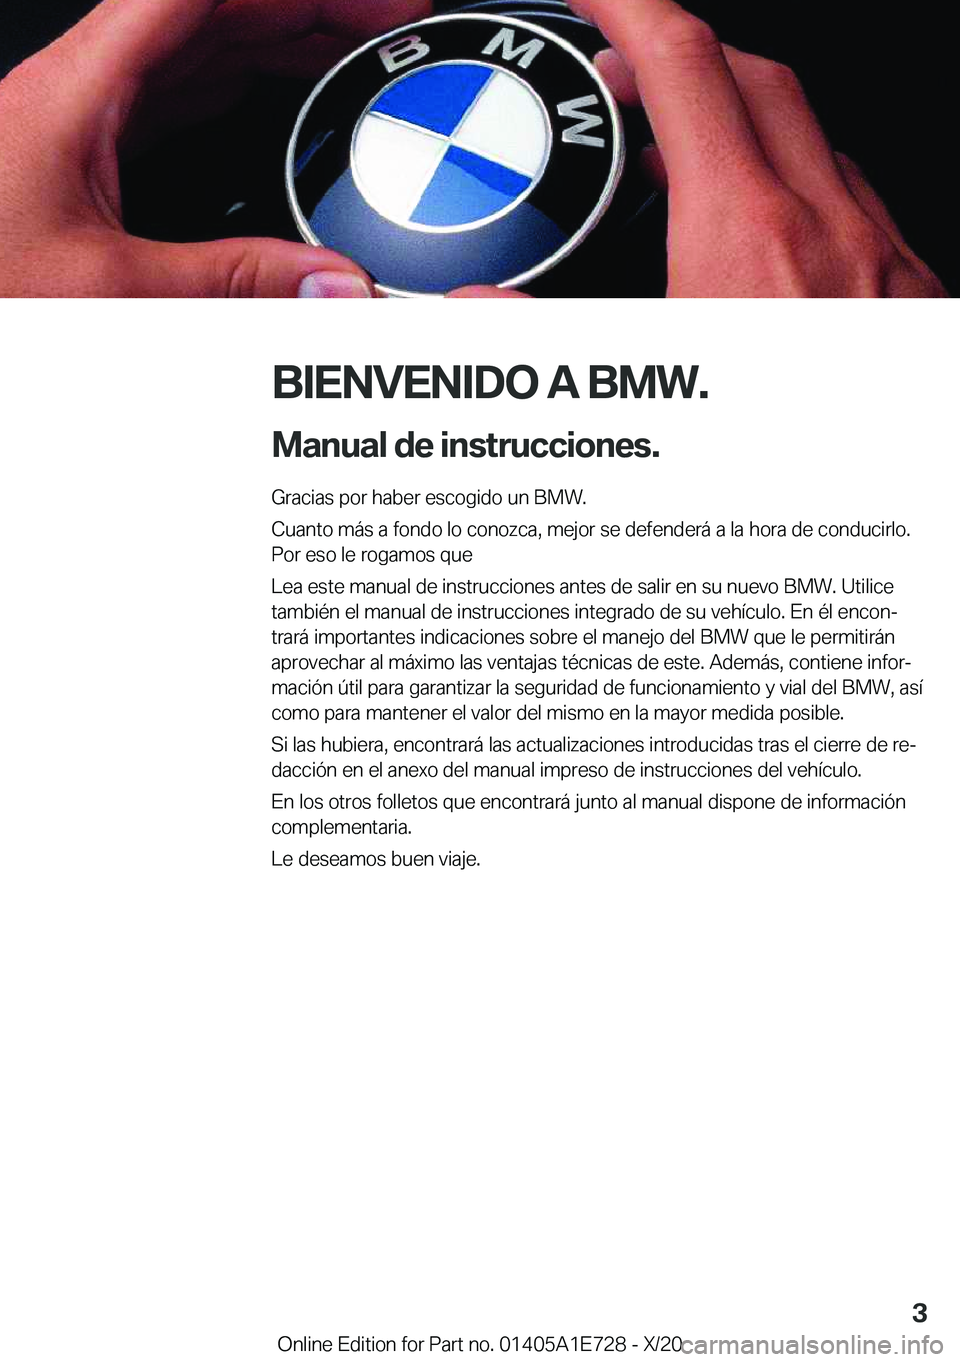 BMW X2 2021  Manuales de Empleo (in Spanish) �B�I�E�N�V�E�N�I�D�O��A��B�M�W�.
�M�a�n�u�a�l��d�e��i�n�s�t�r�u�c�c�i�o�n�e�s�. �G�r�a�c�i�a�s��p�o�r��h�a�b�e�r��e�s�c�o�g�i�d�o��u�n��B�M�W�.
�C�u�a�n�t�o��m�